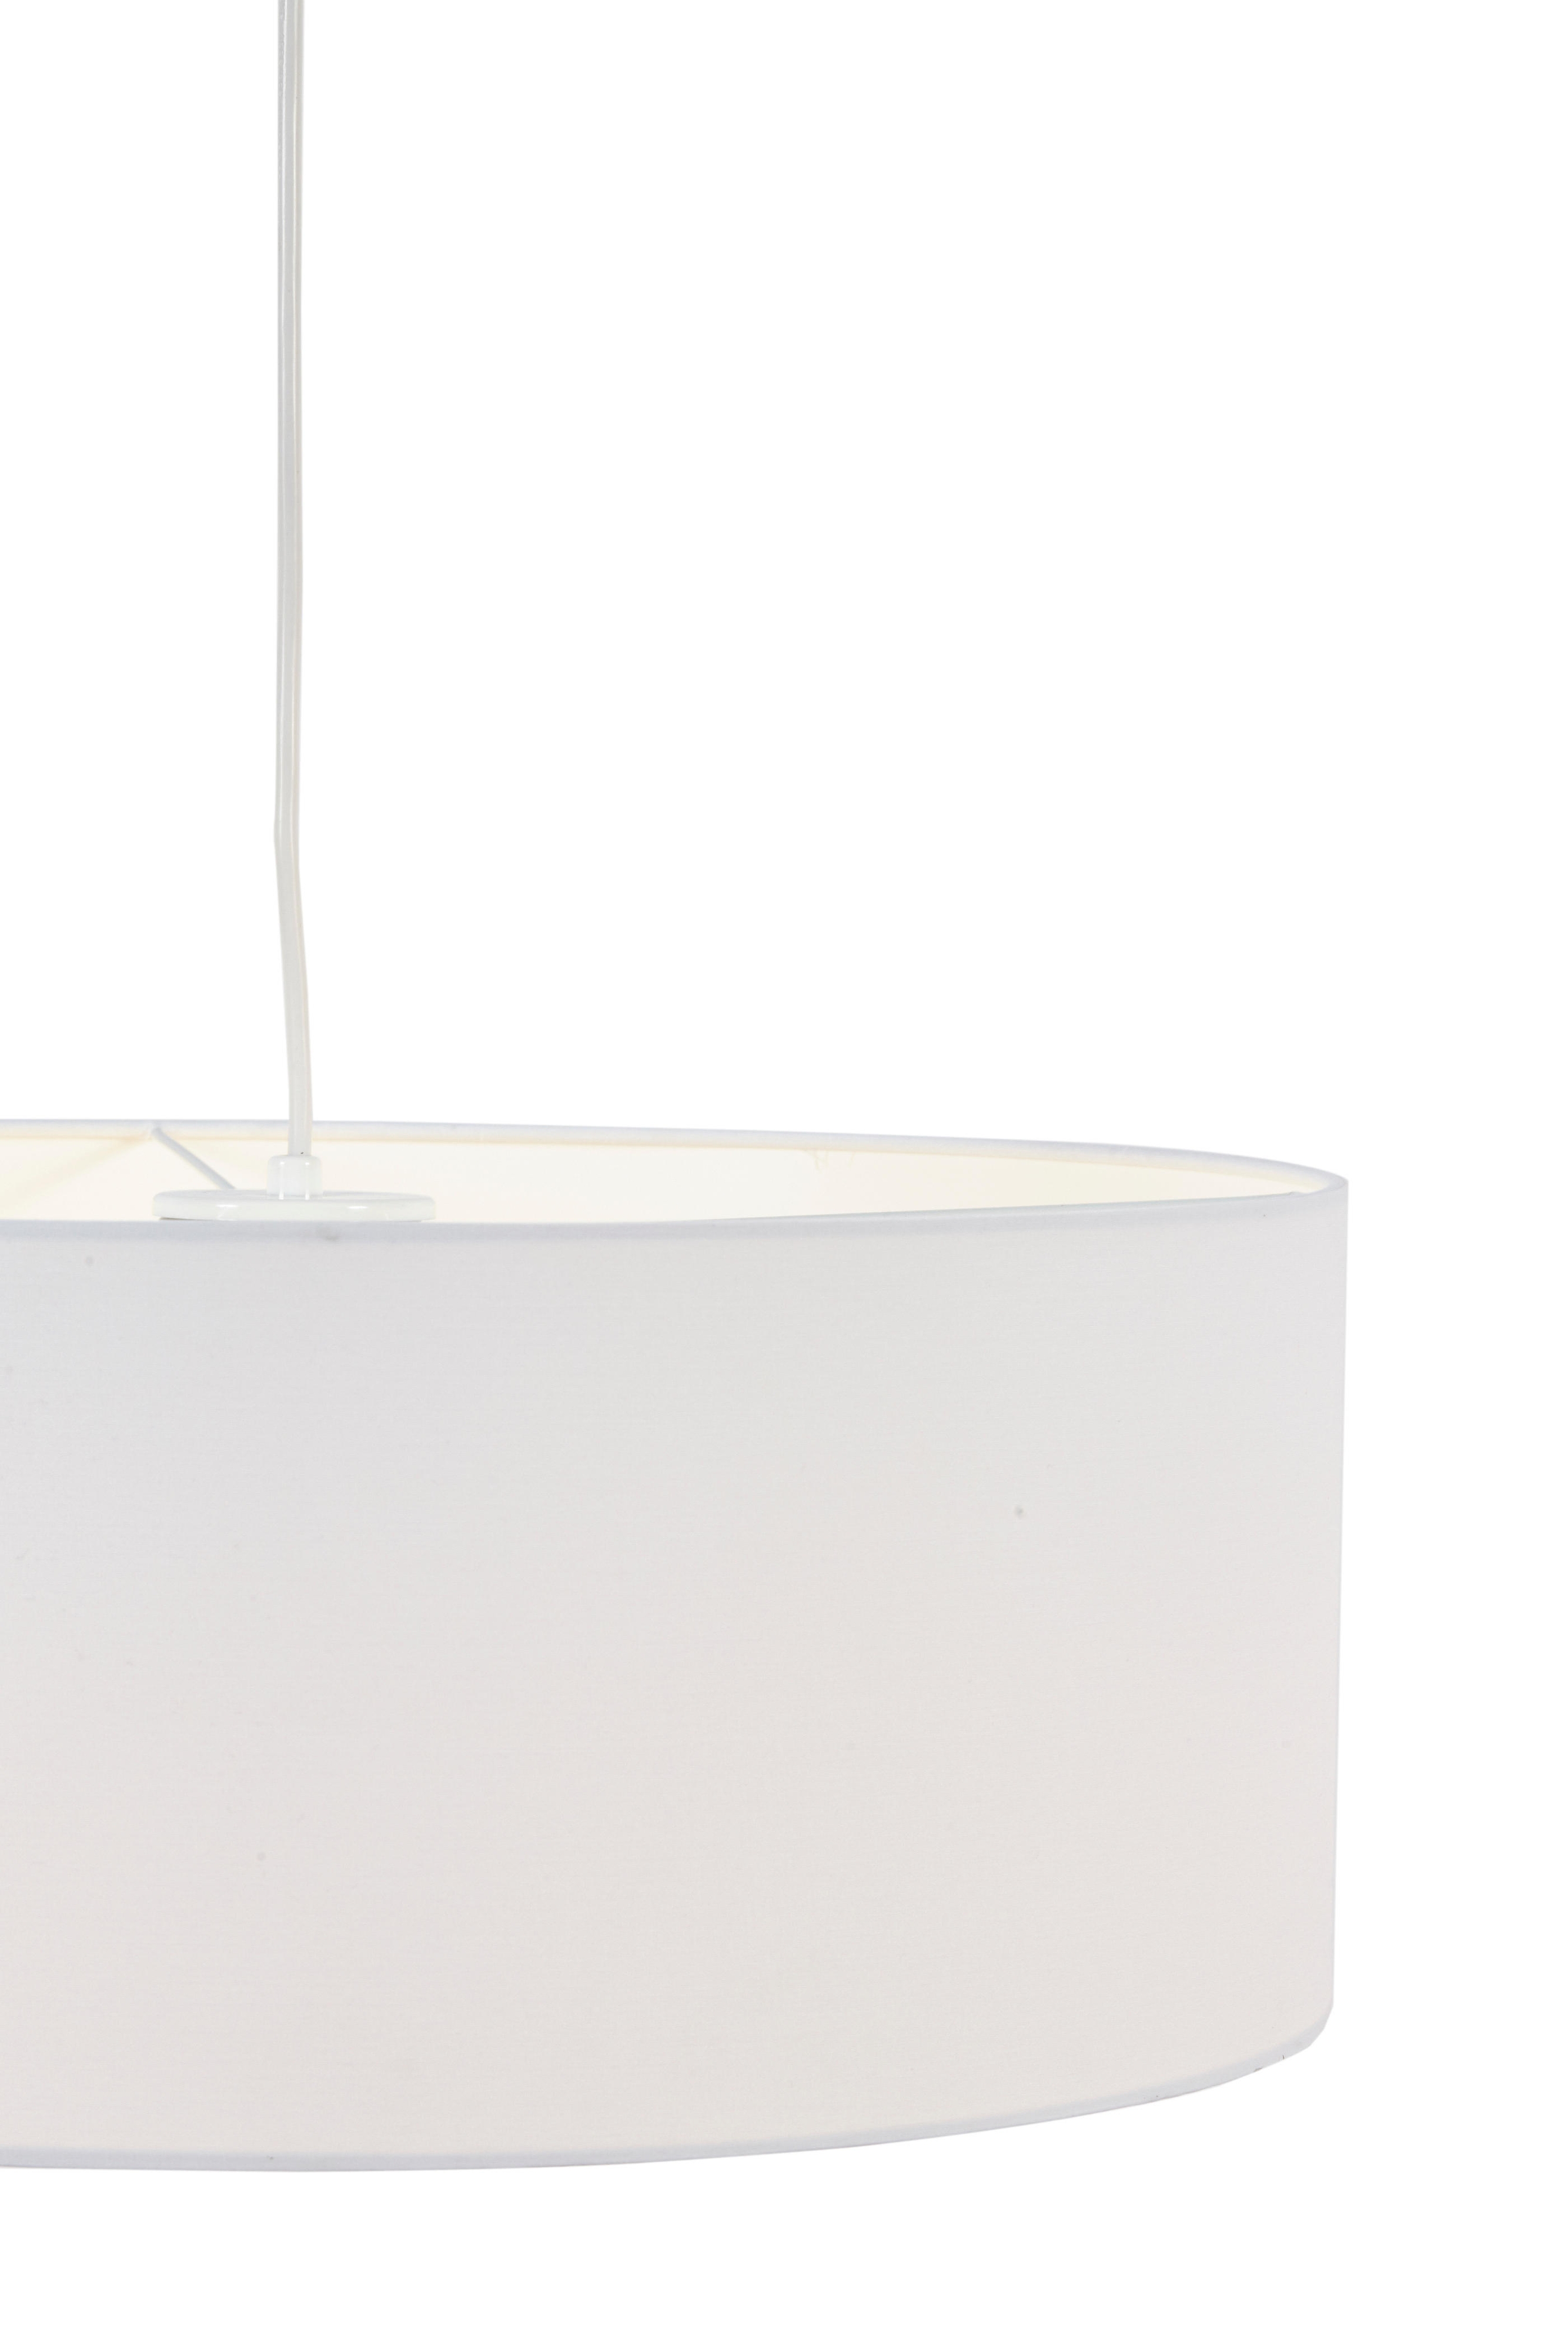 Lampadario Moderno Sitia bianco in tessuto, D. 48 cm, 3 luci, INSPIRE - 6